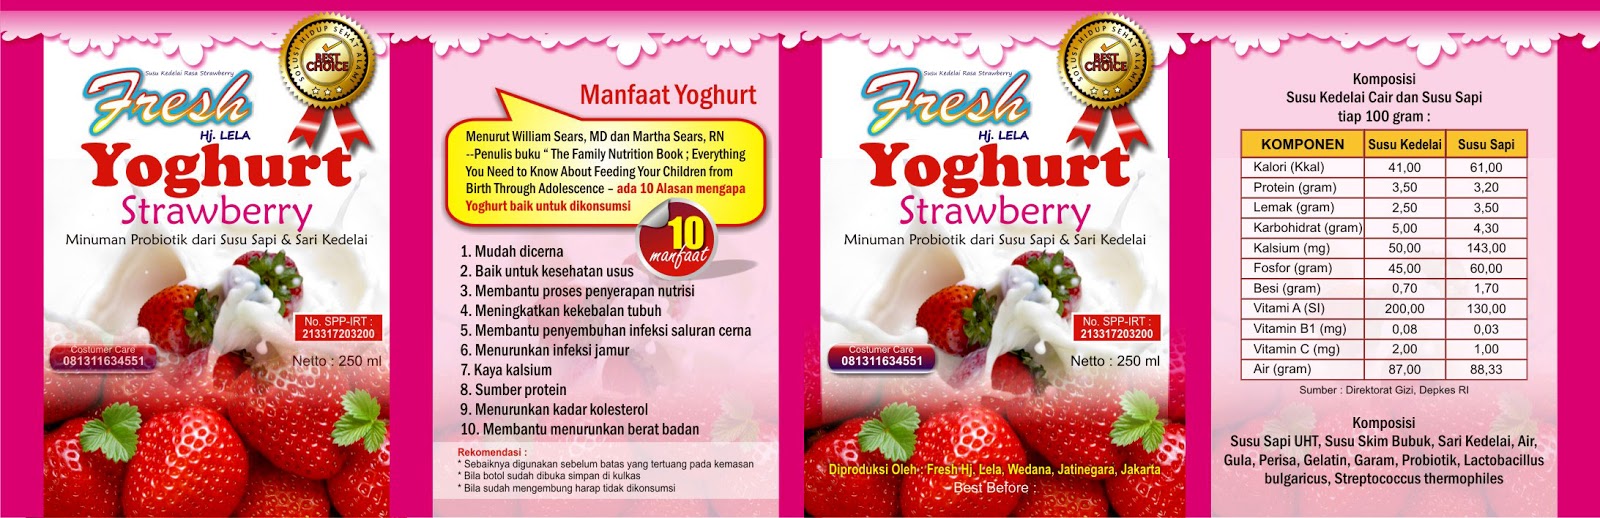 desain kemasan yoghurt cdr
